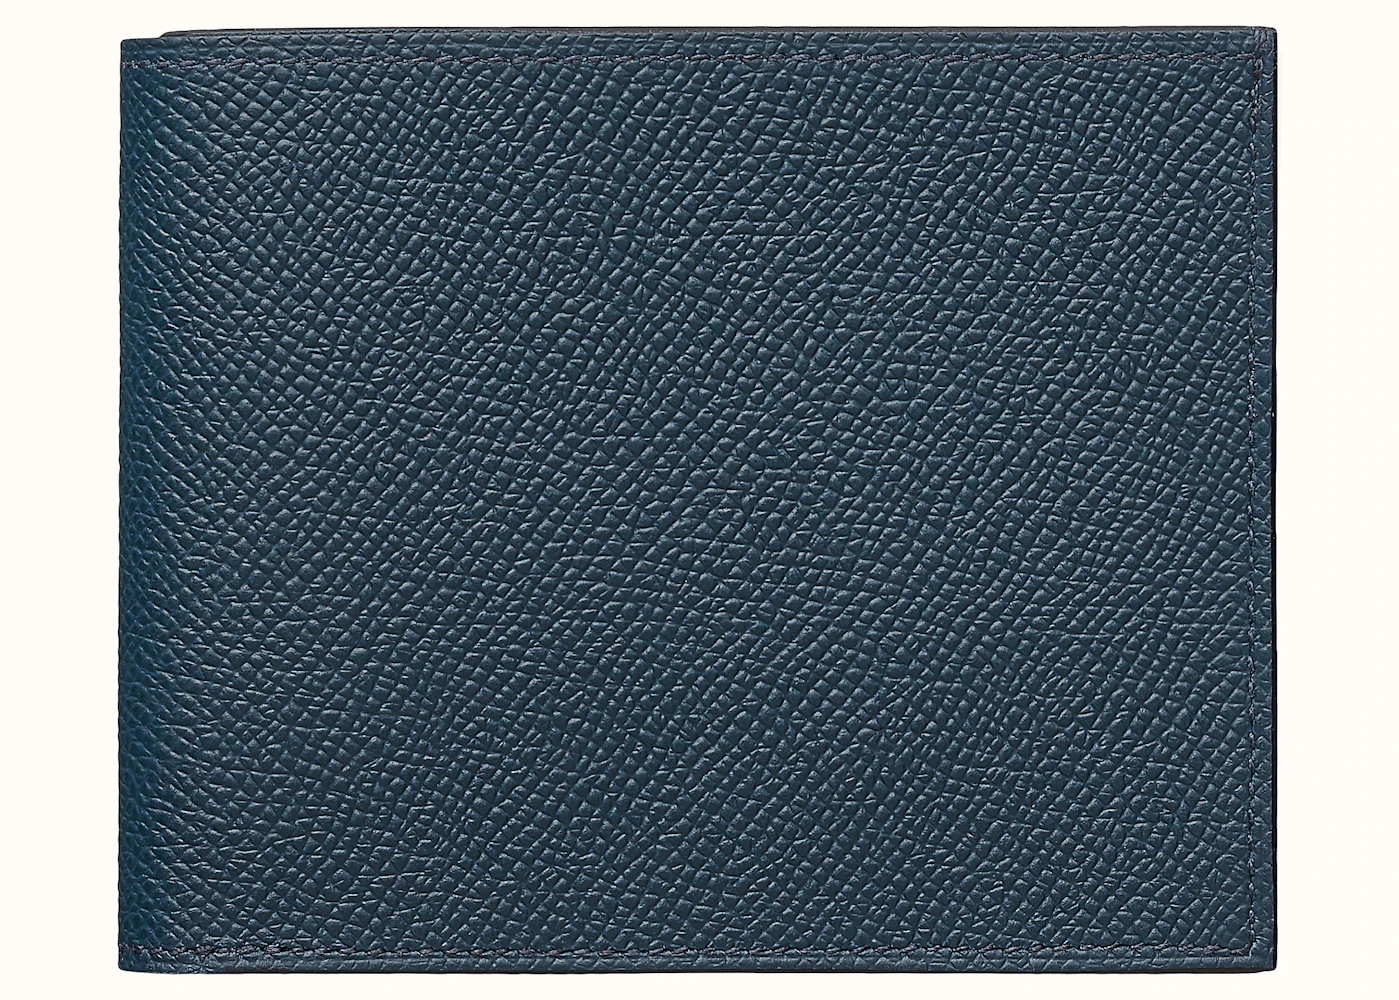 HERMES Evercolor Citizen Twill Card Case Bleu Royal Celeste Orange